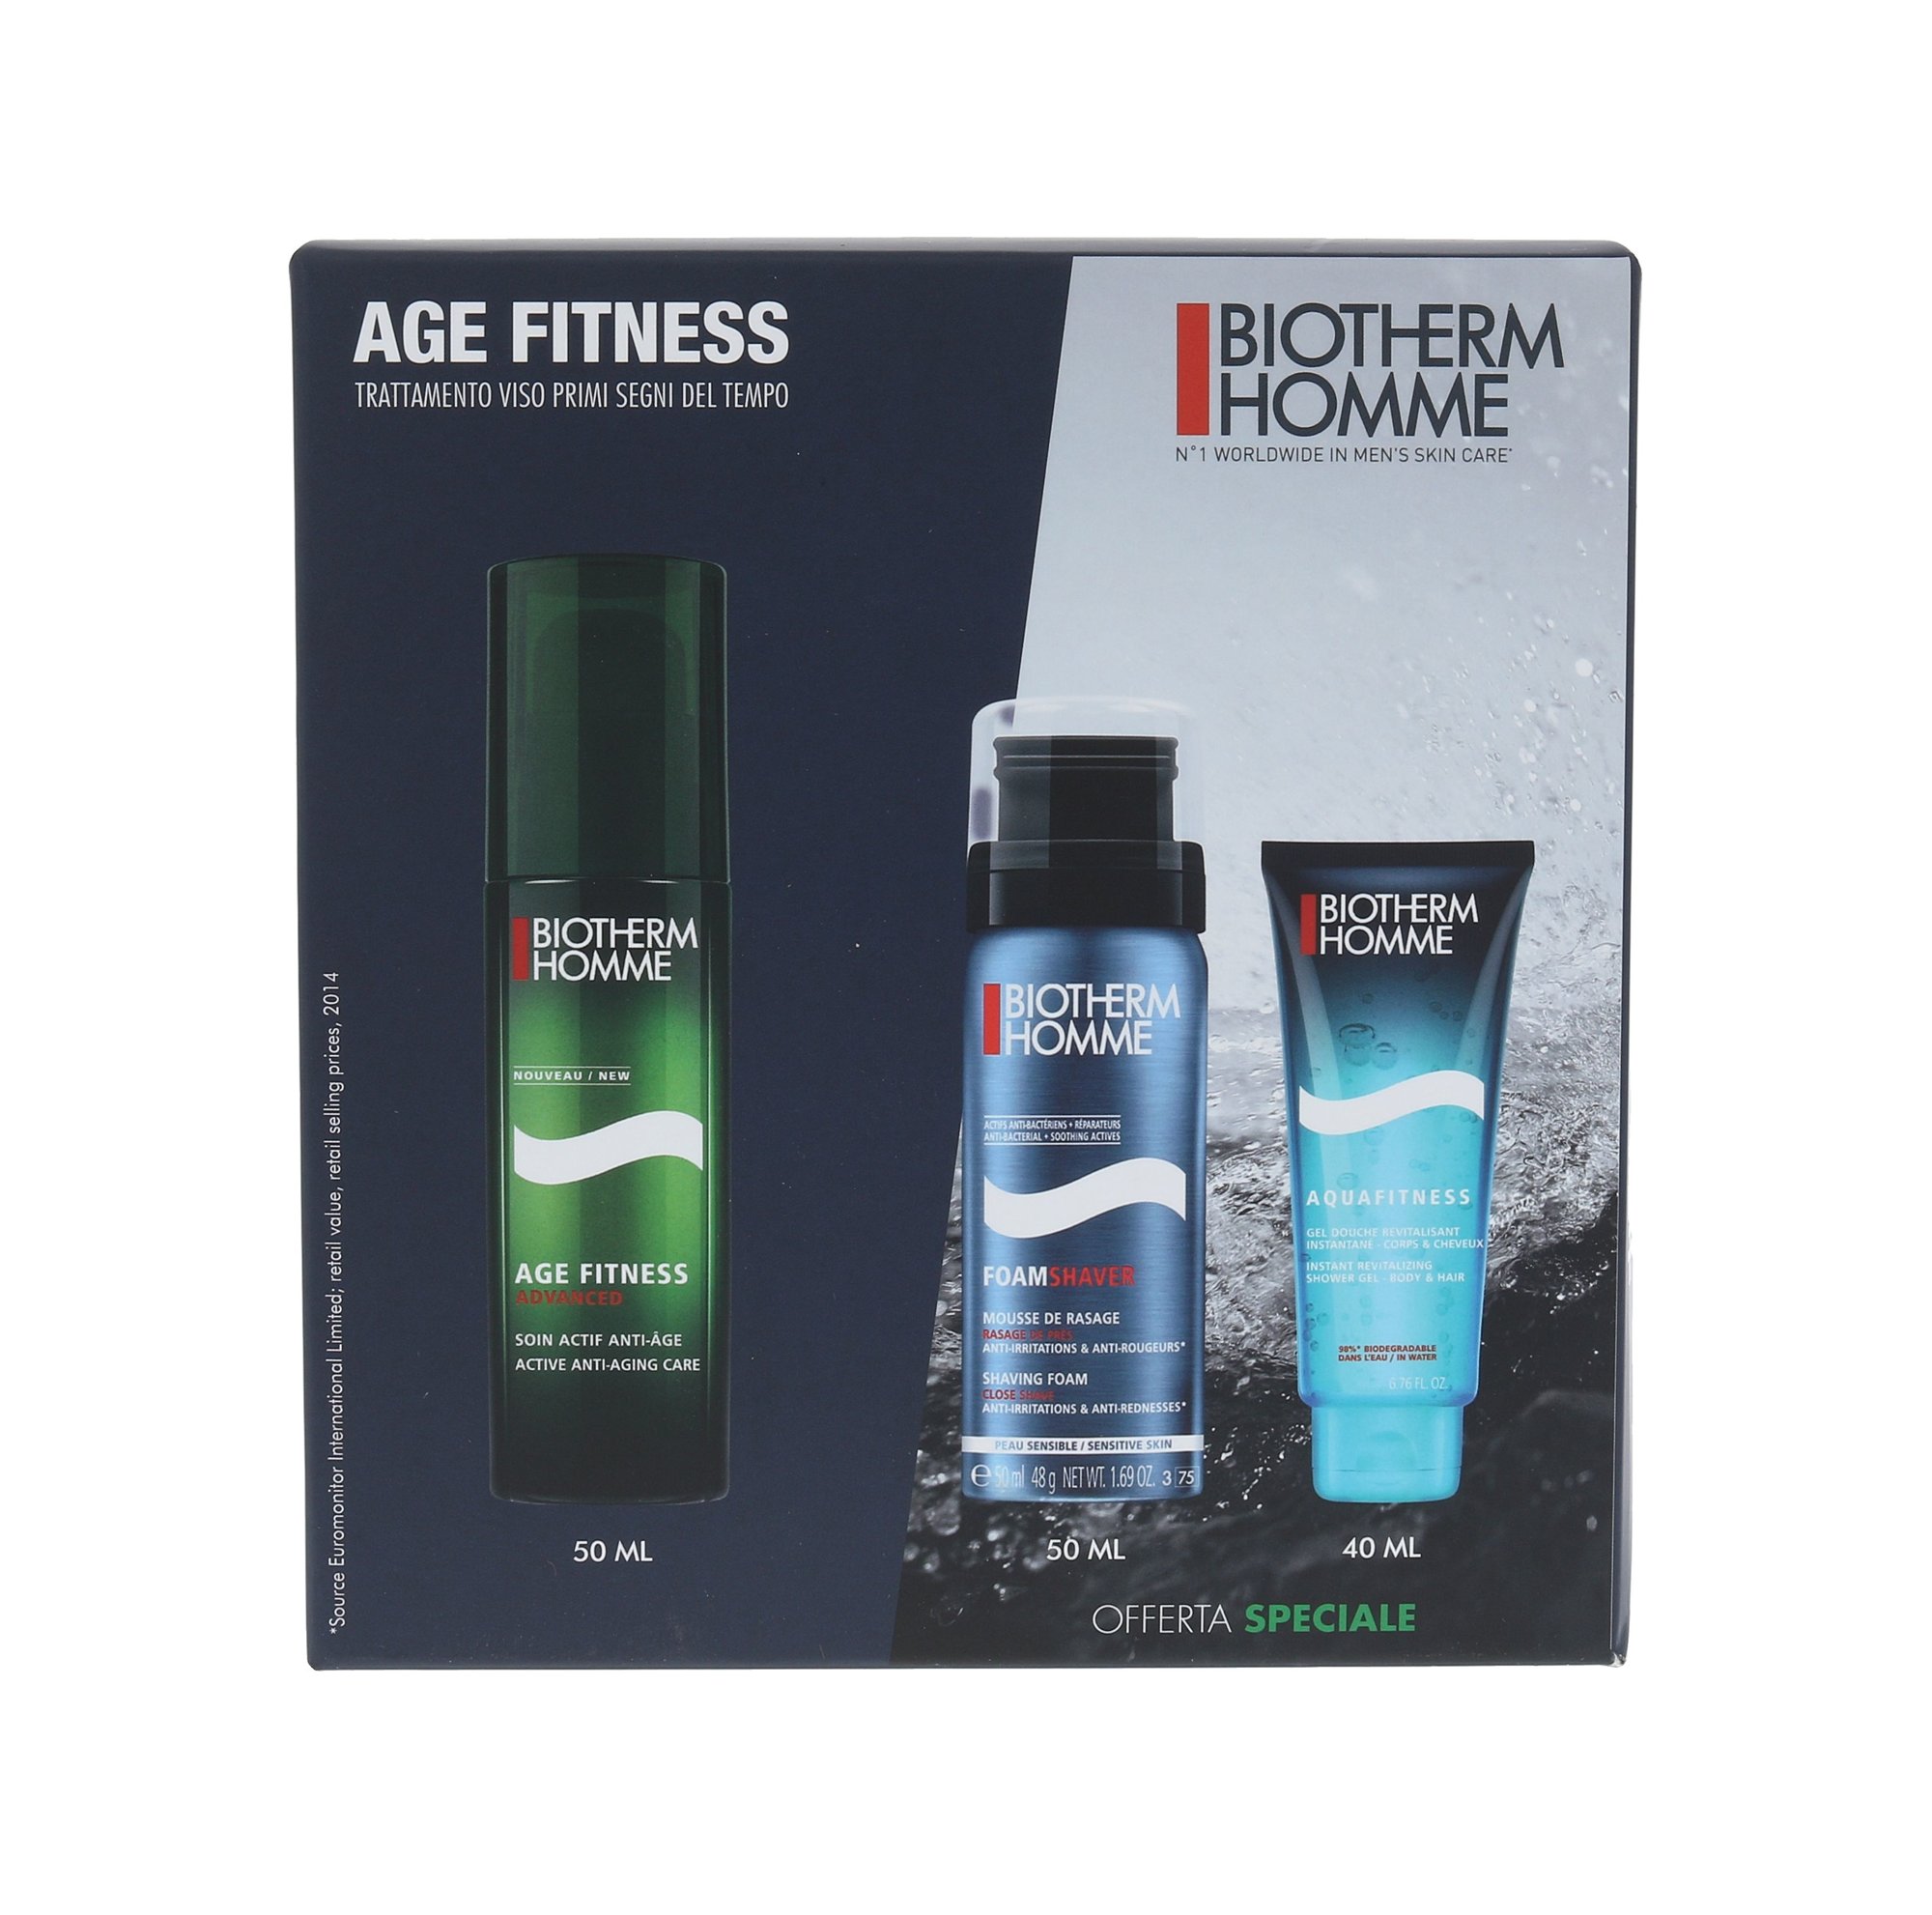 Biotherm Homme Age Fitness Advanced 50ml Skin Care Homme Age Fitness Advanced 50 ml +  Homme Foam Shaver 50 ml + Shower Gel Homme Aquafitness 40 ml dieninis kremas Rinkinys